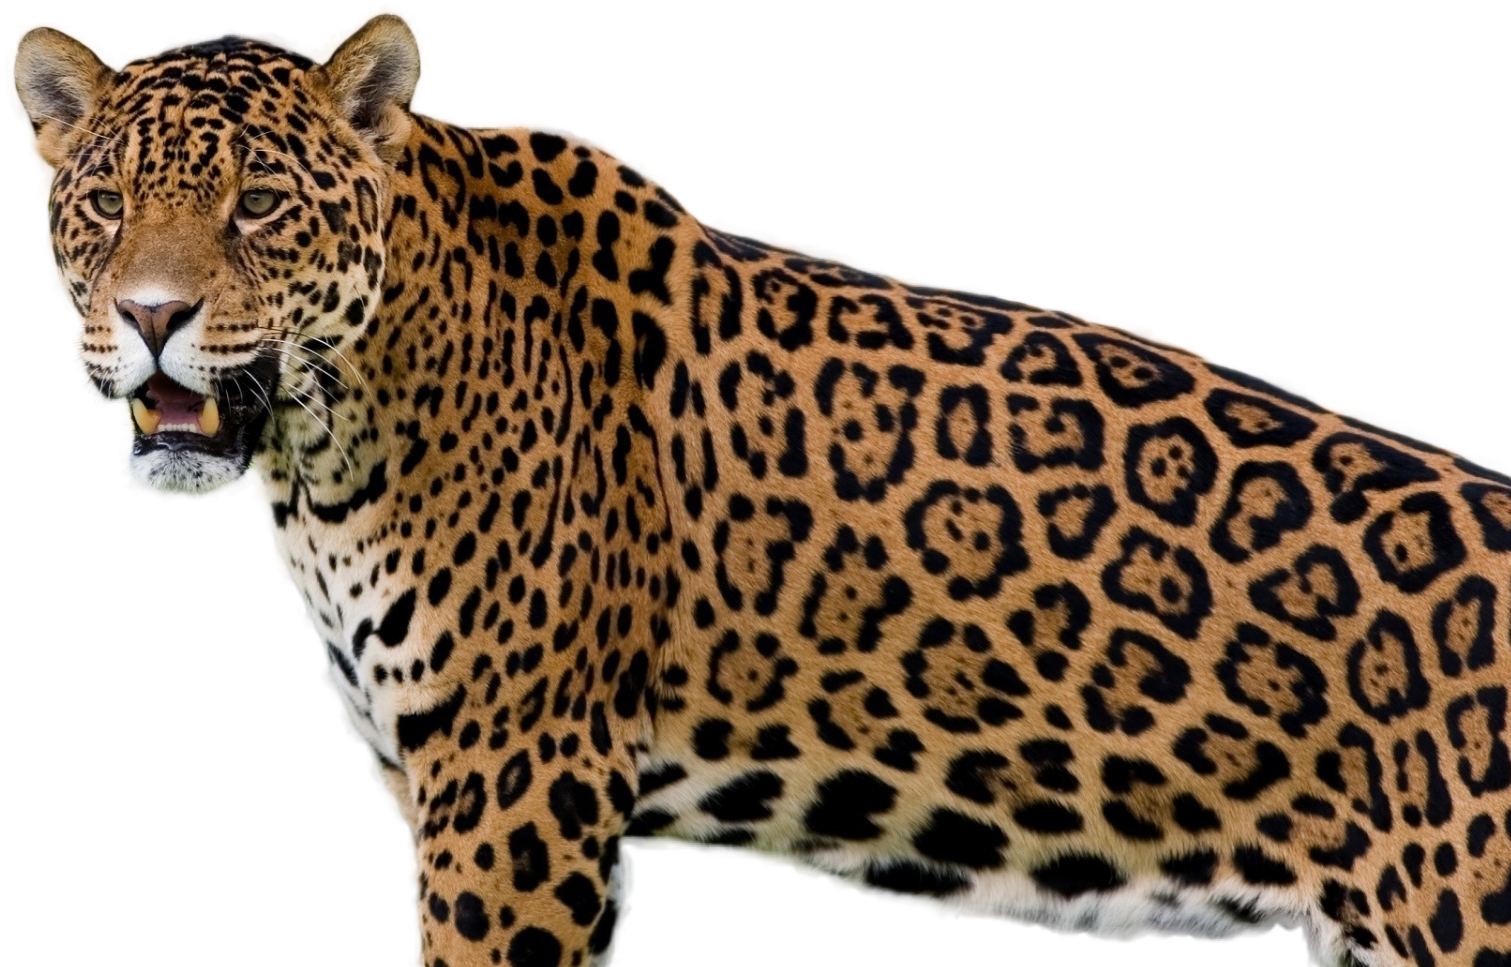 A Close Up Of A Leopard